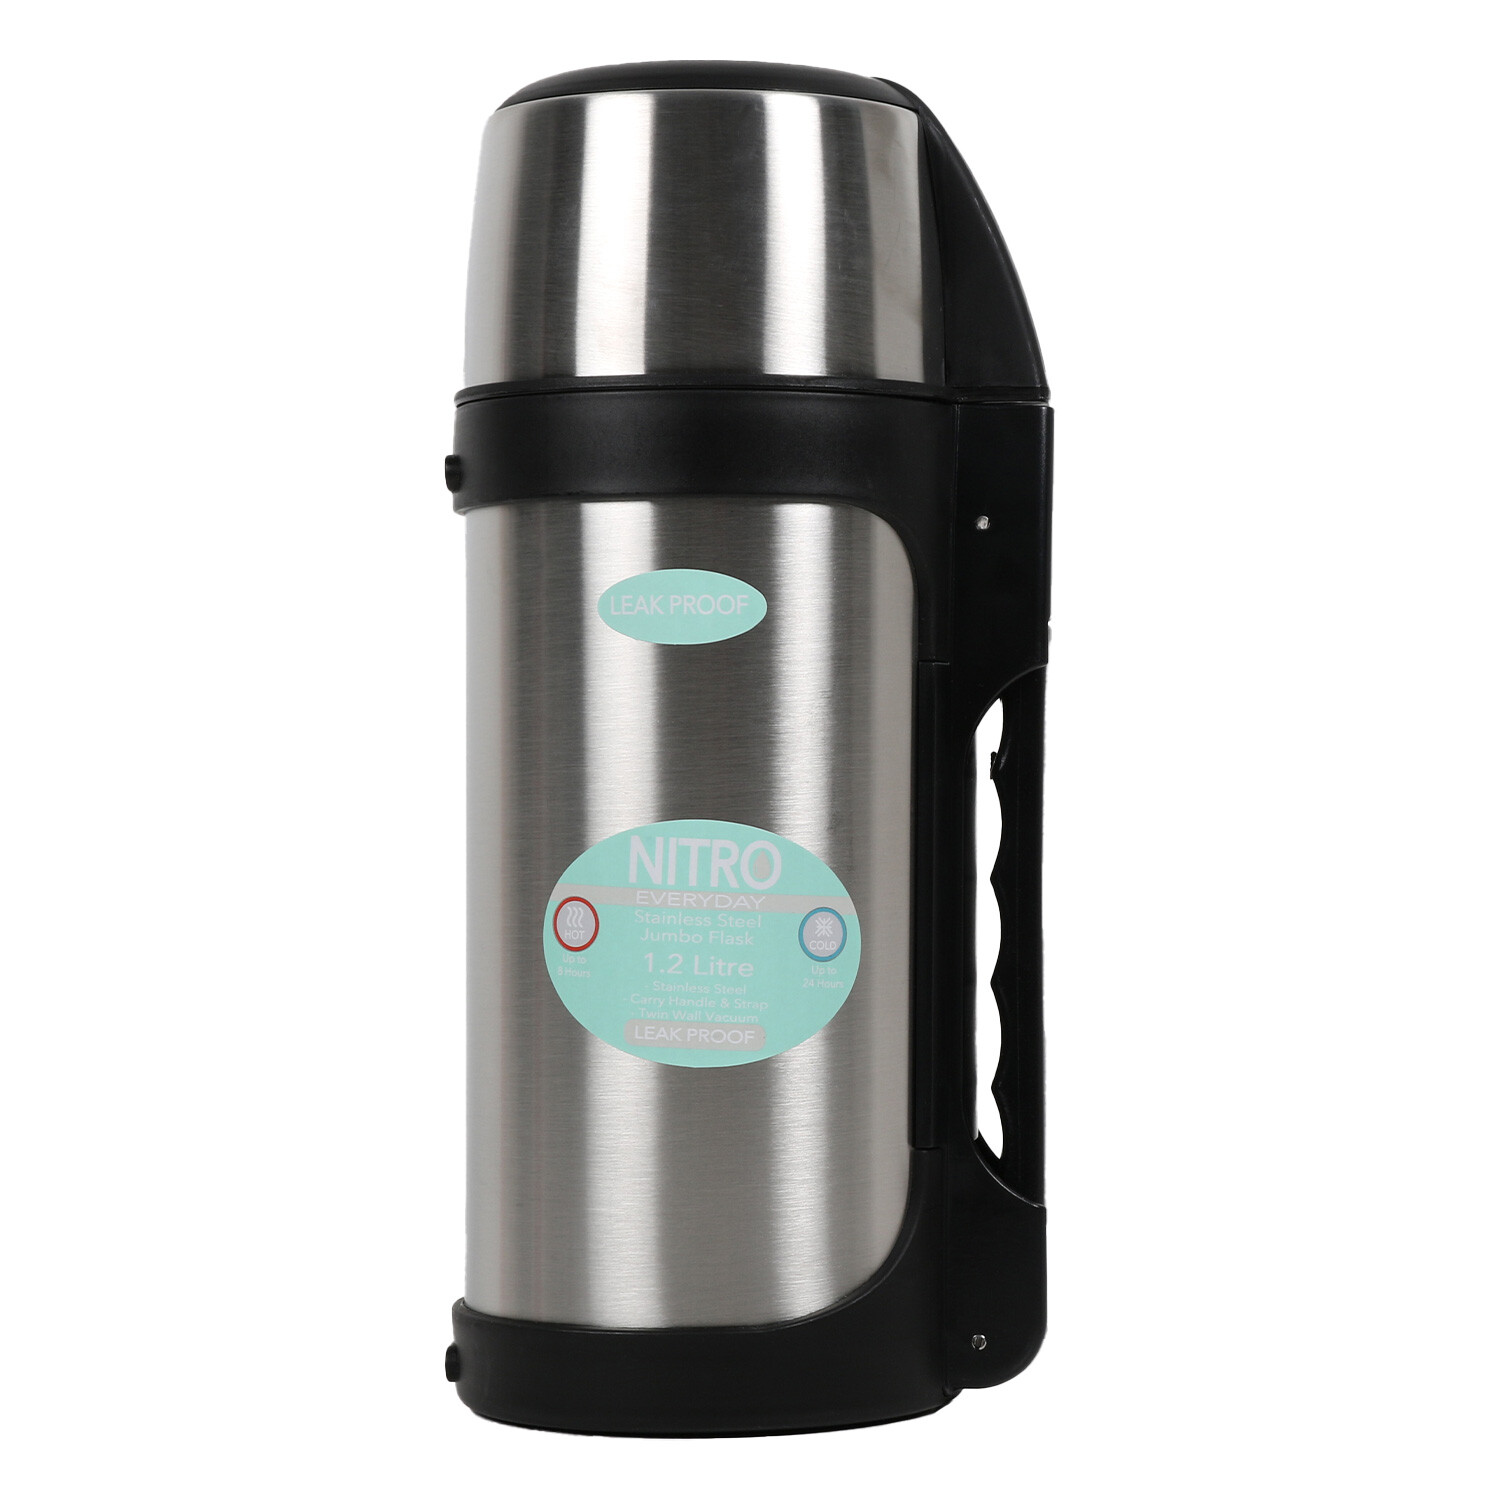 Nitro Silver Jumbo Vacuum Flask 1.2L Image